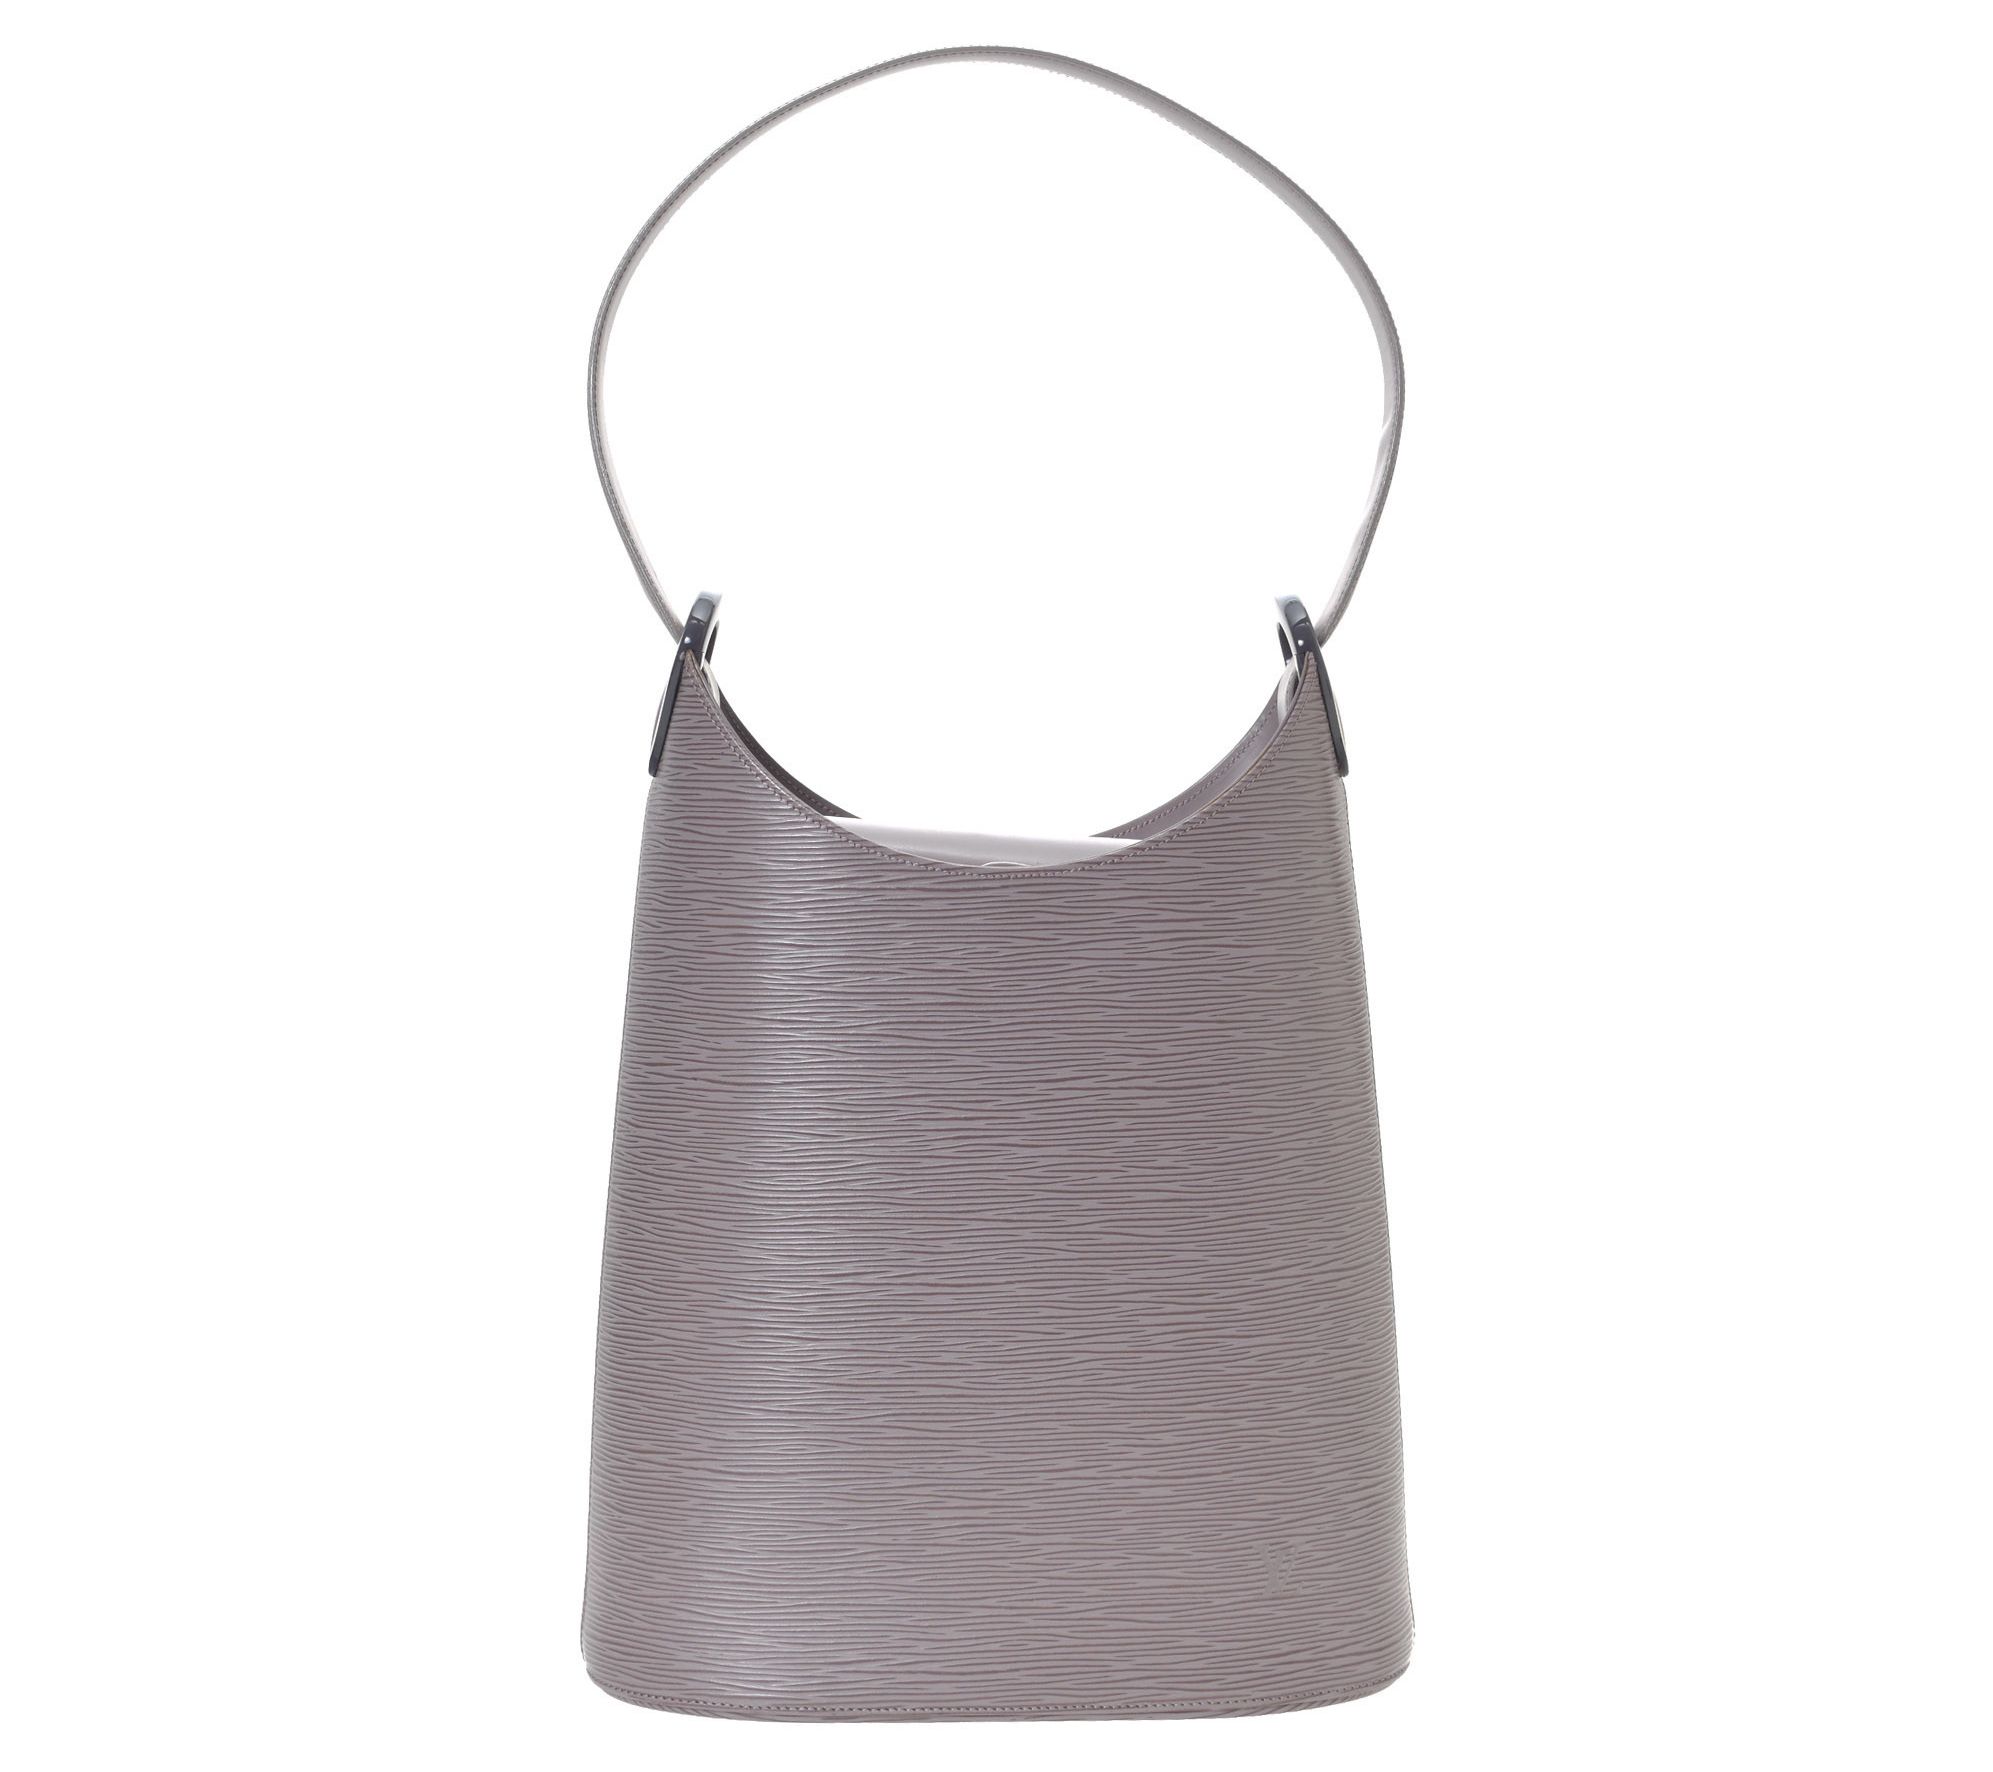 Pu Leather Shoulder LV Imported Sling Bag, For Casual Wear